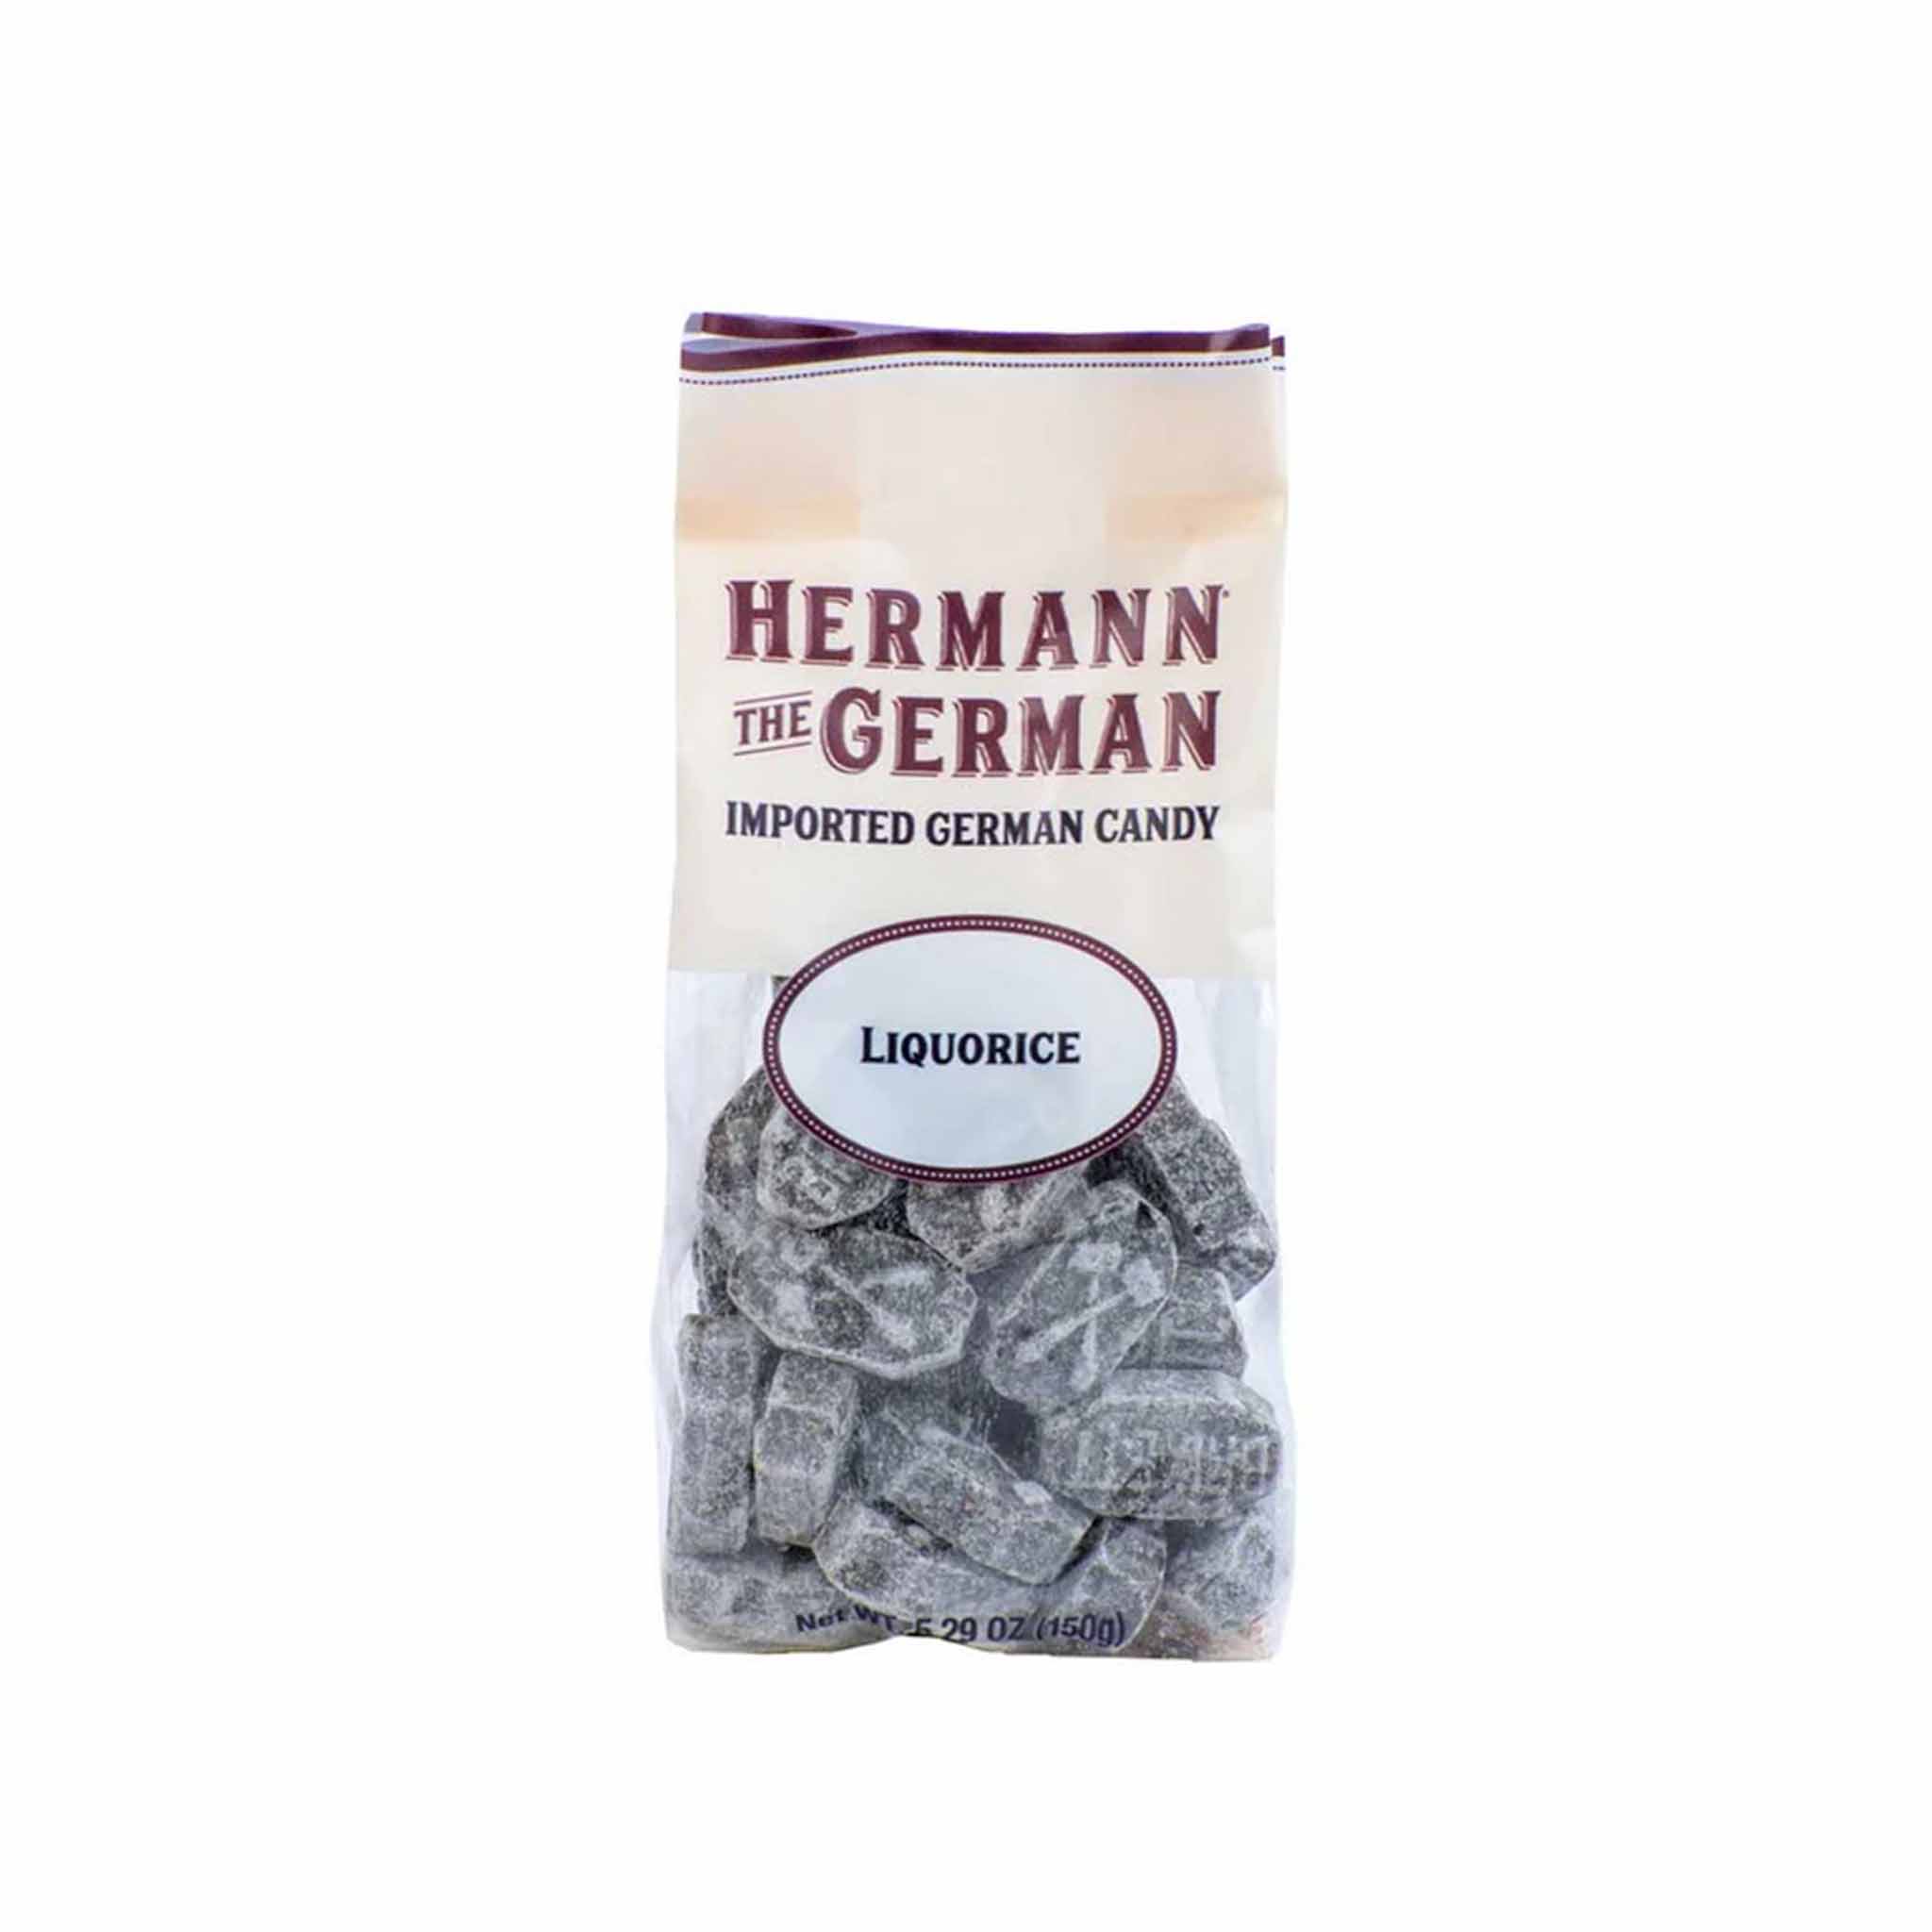 HERMANN THE GERMAN LIQUORICE CANDY 150g